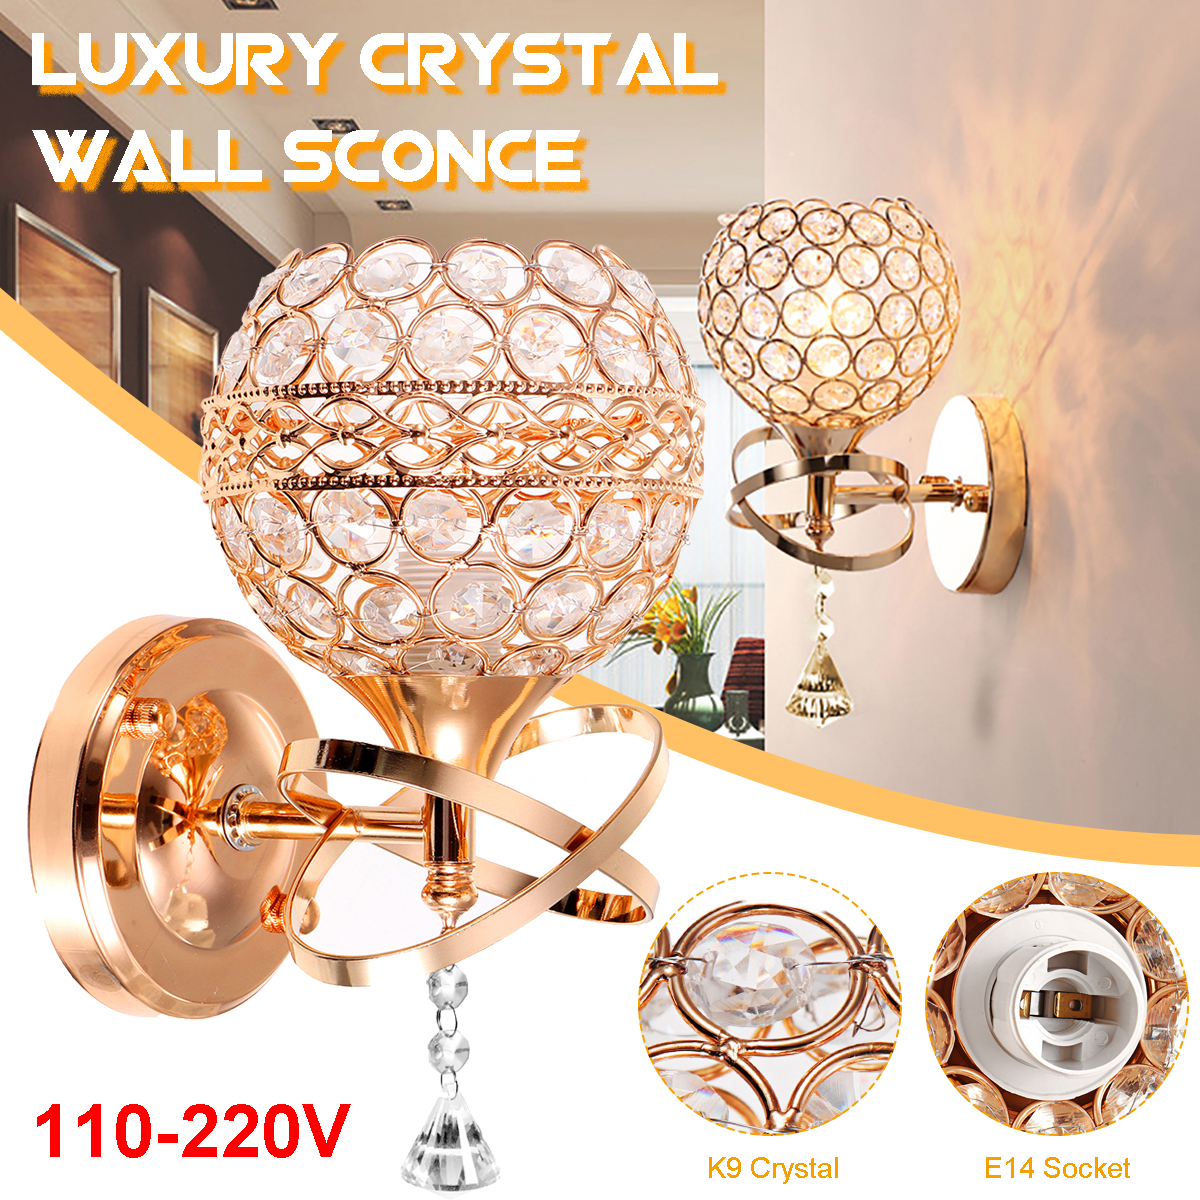 110-220V-E14-Modern-Chrome-Crystal-LED-Wall-Light-Lamp-Luxury-Bedside-Bedroom-Home-Decor-Without-Bul-1797018-1